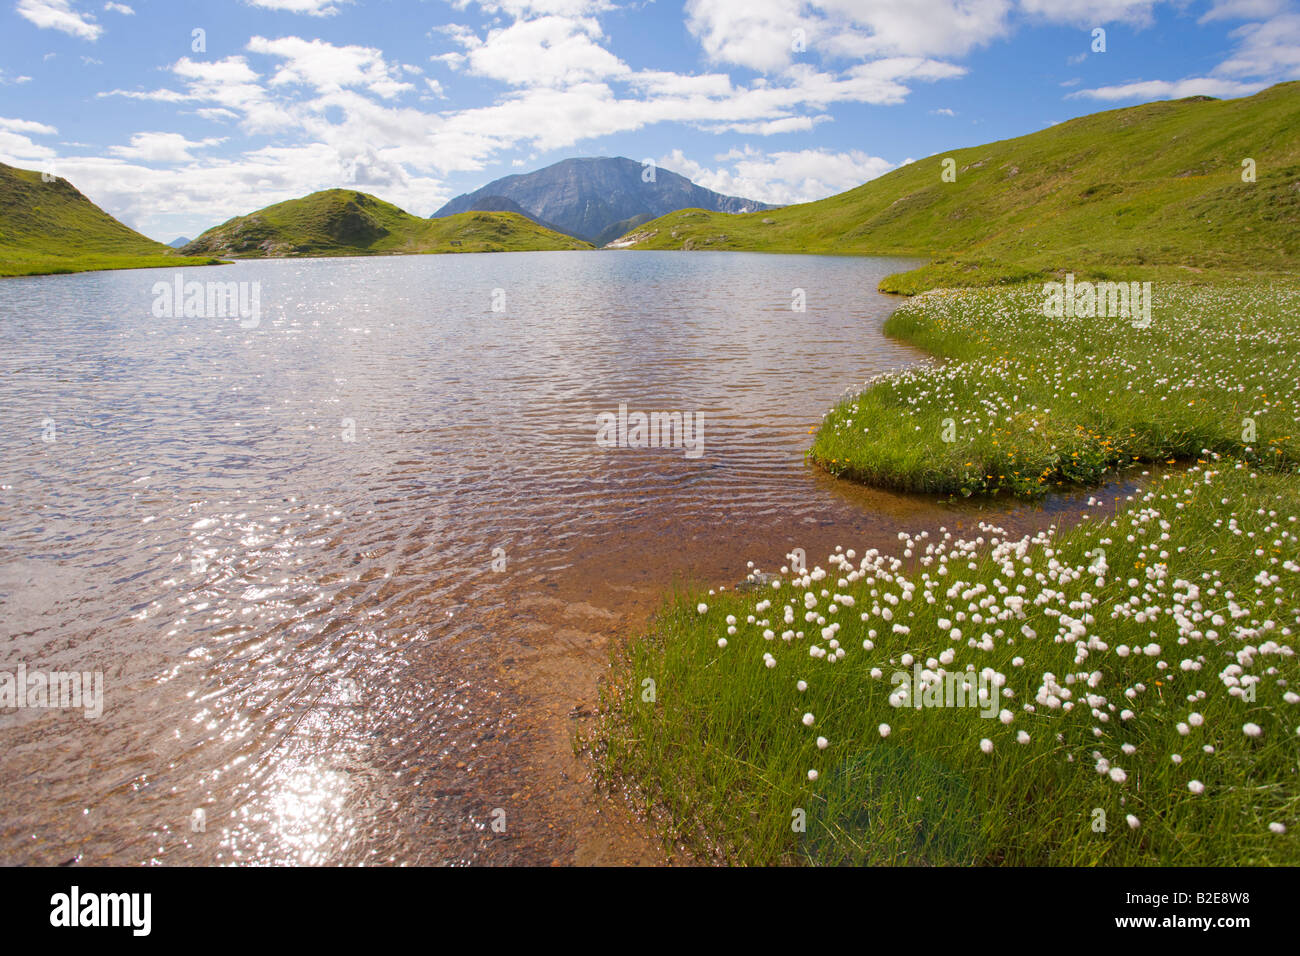 Lake surrounded by mountains, Niedere Tauern, Salzburg, Austria Stock Photo